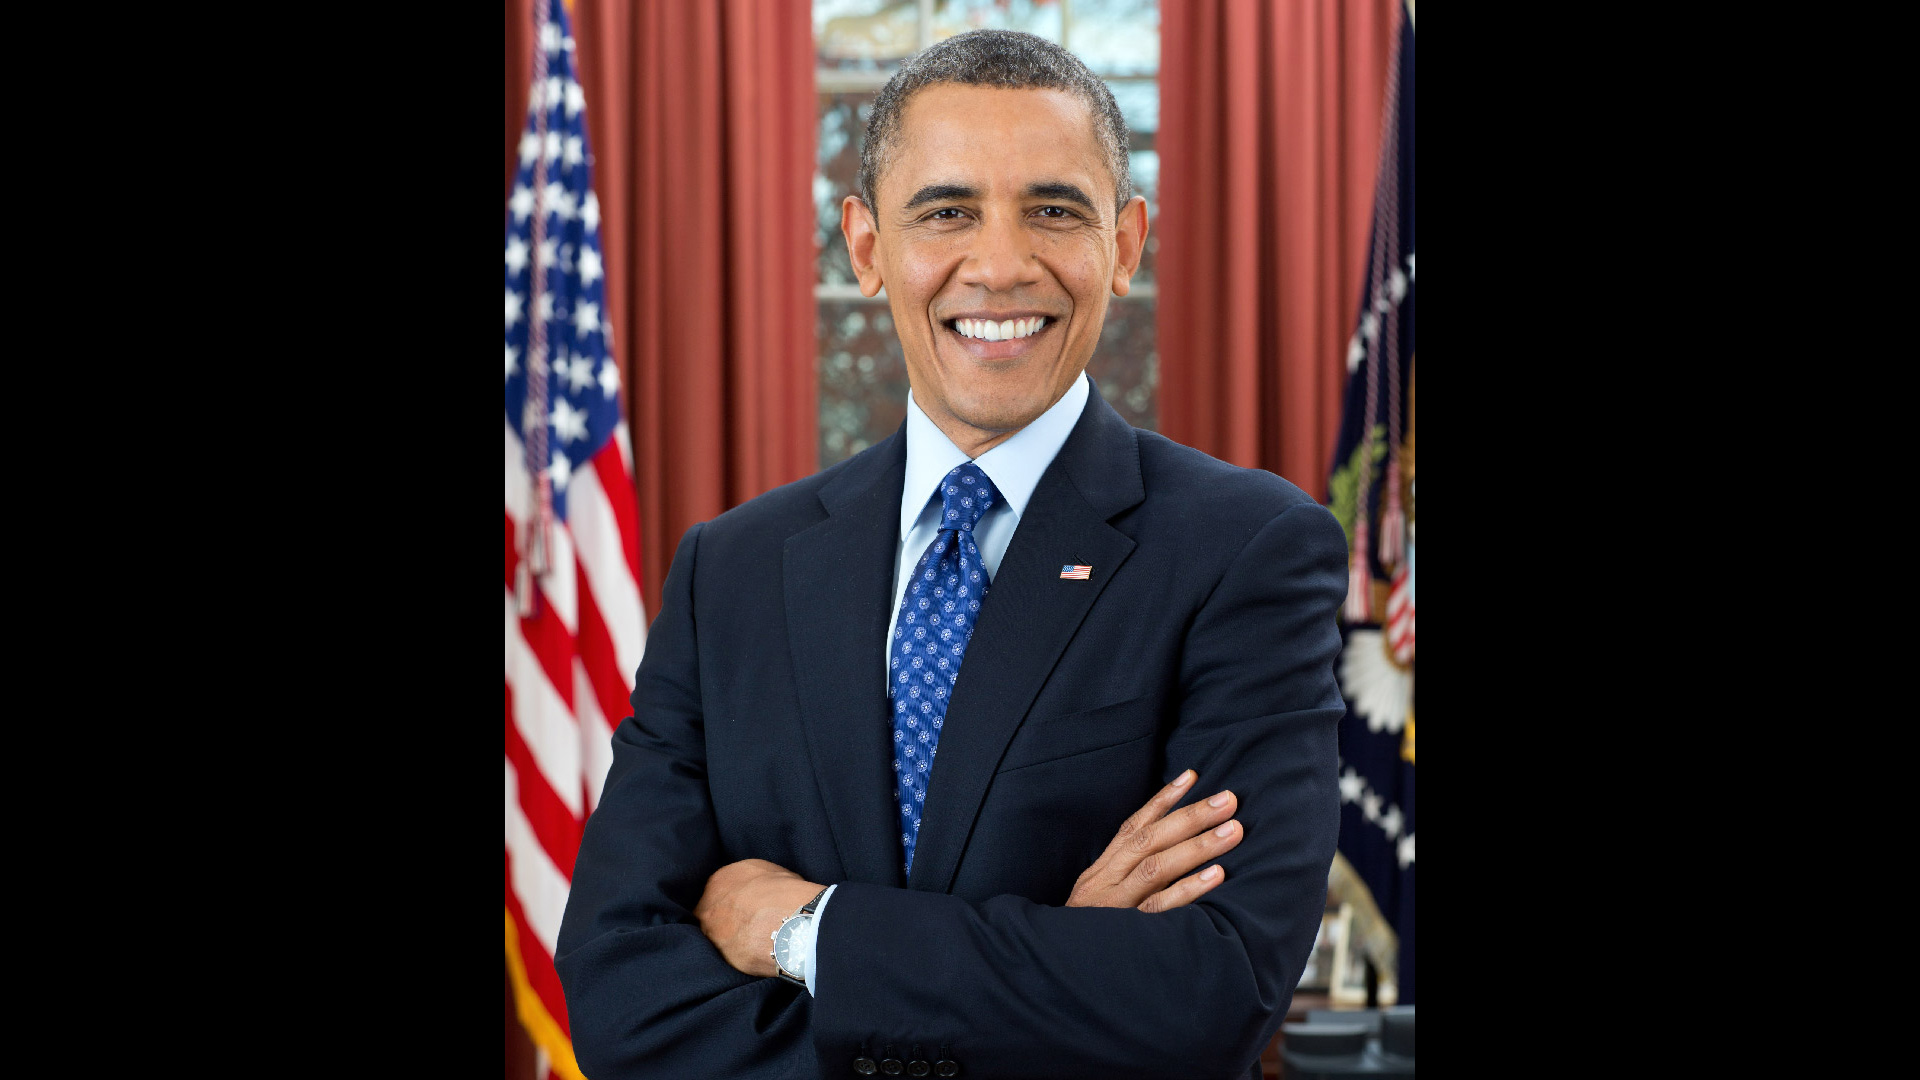 examples/obama-1080p.jpg